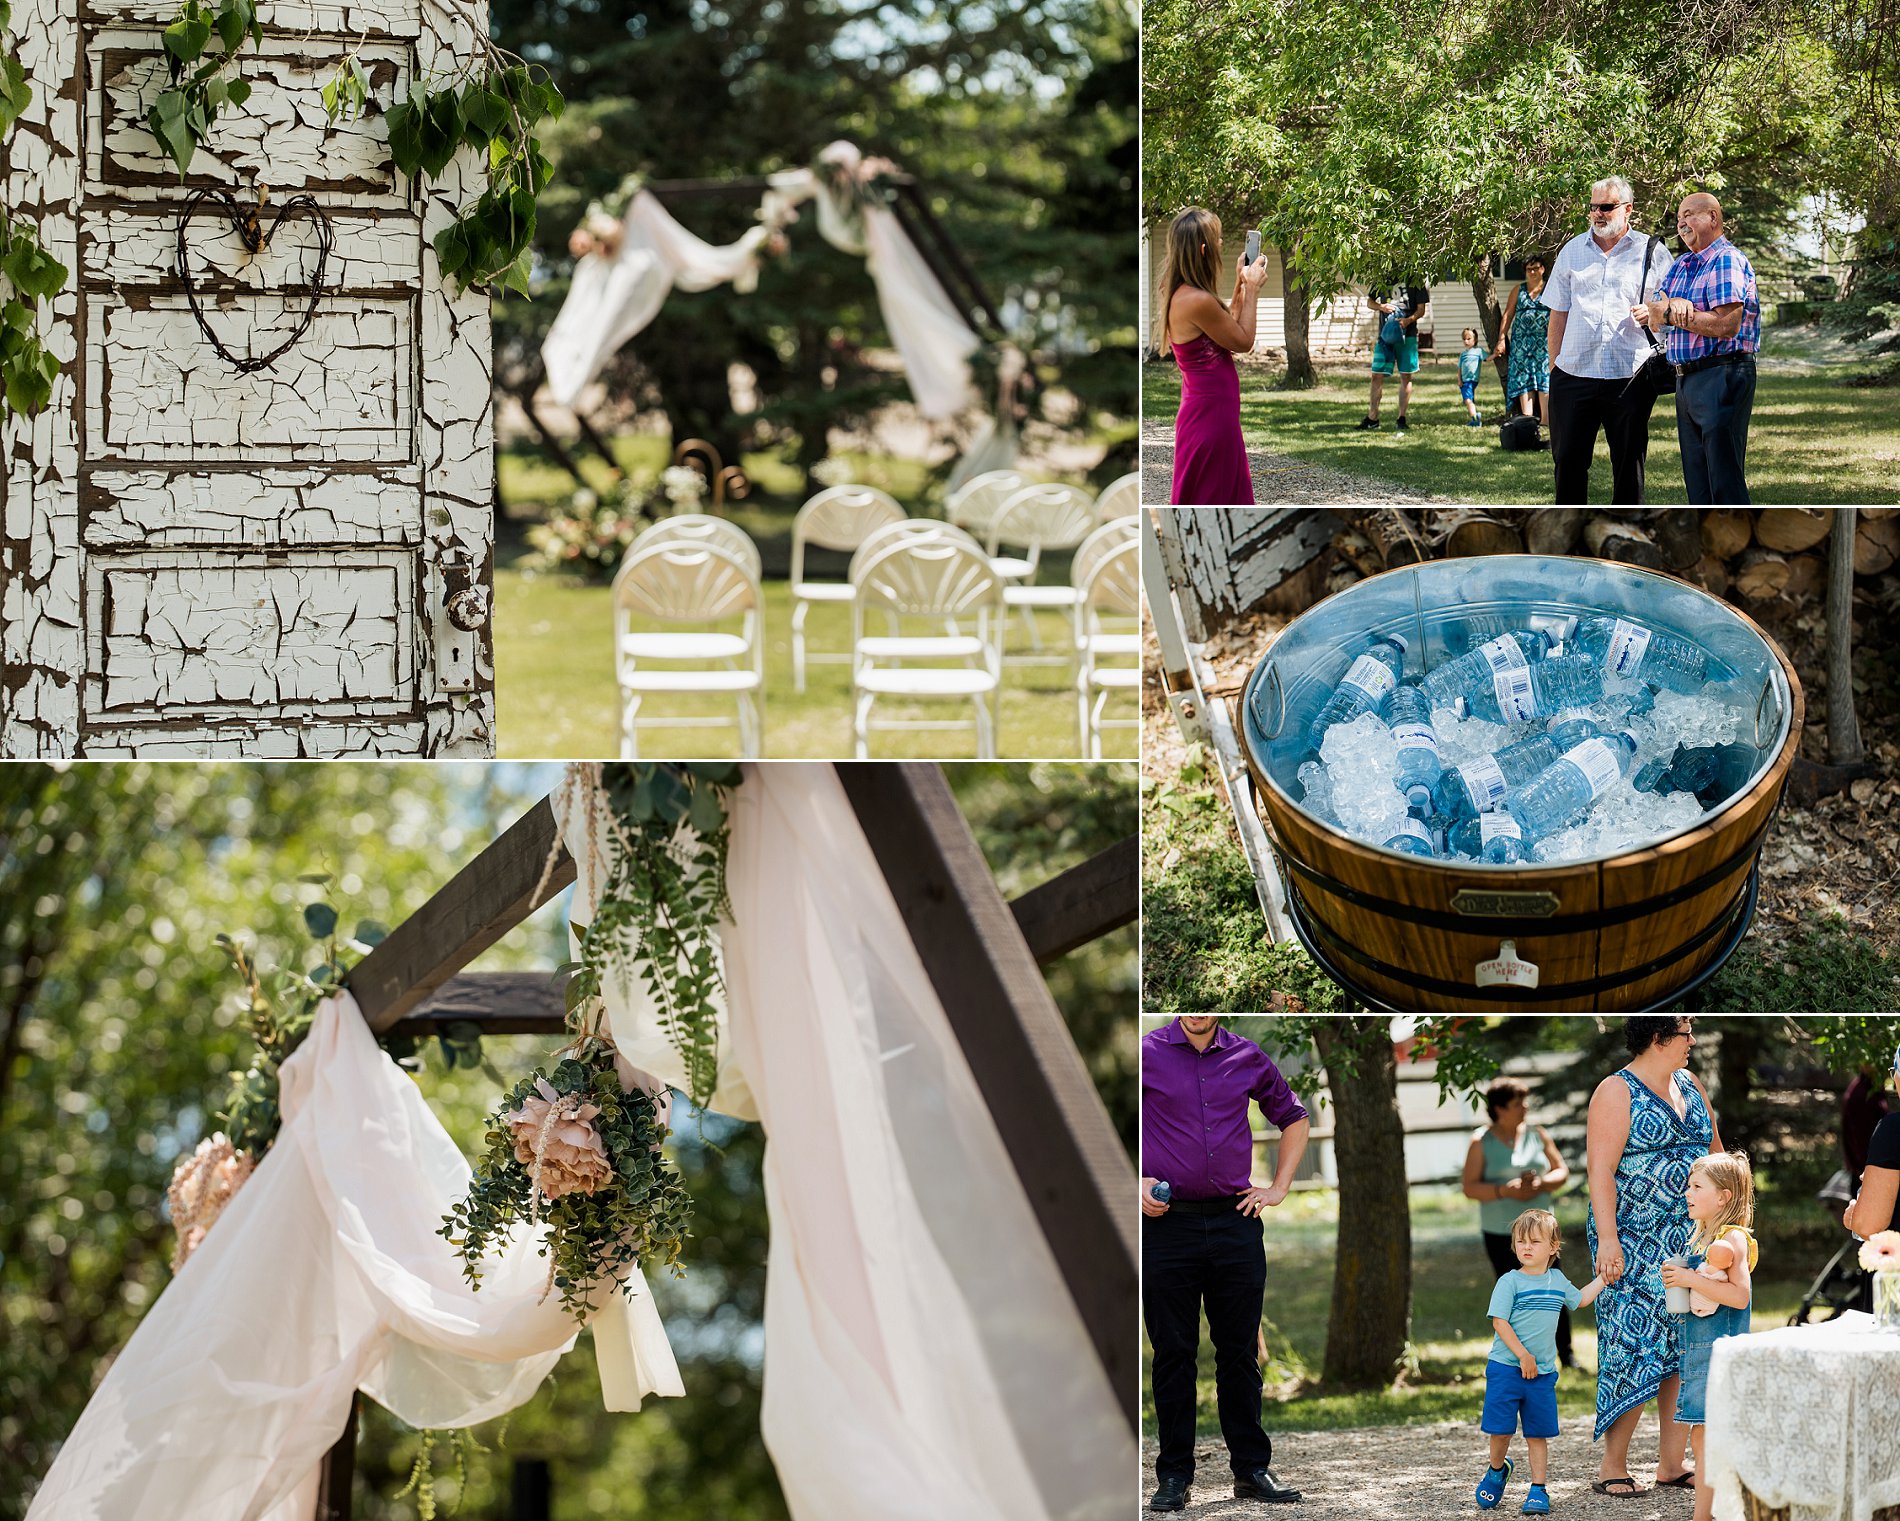 Guests arrive at a backyard wedding in Prince Albert, Saskatchewan.